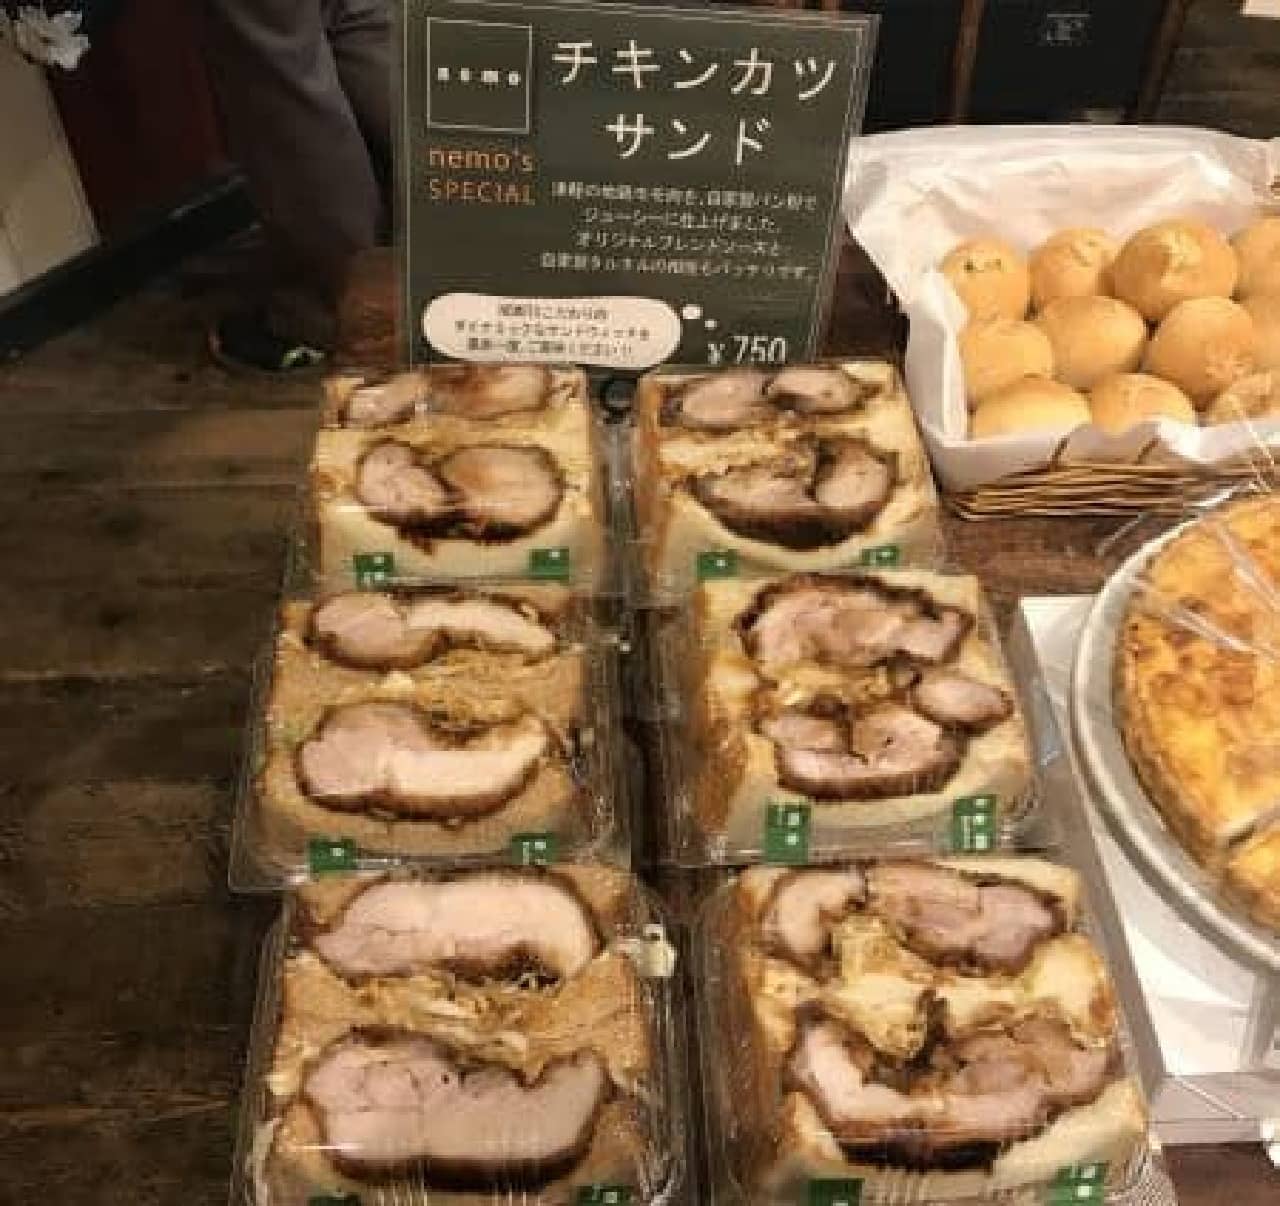 "Chicken cutlet sandwich" from nemo bakery & cafe